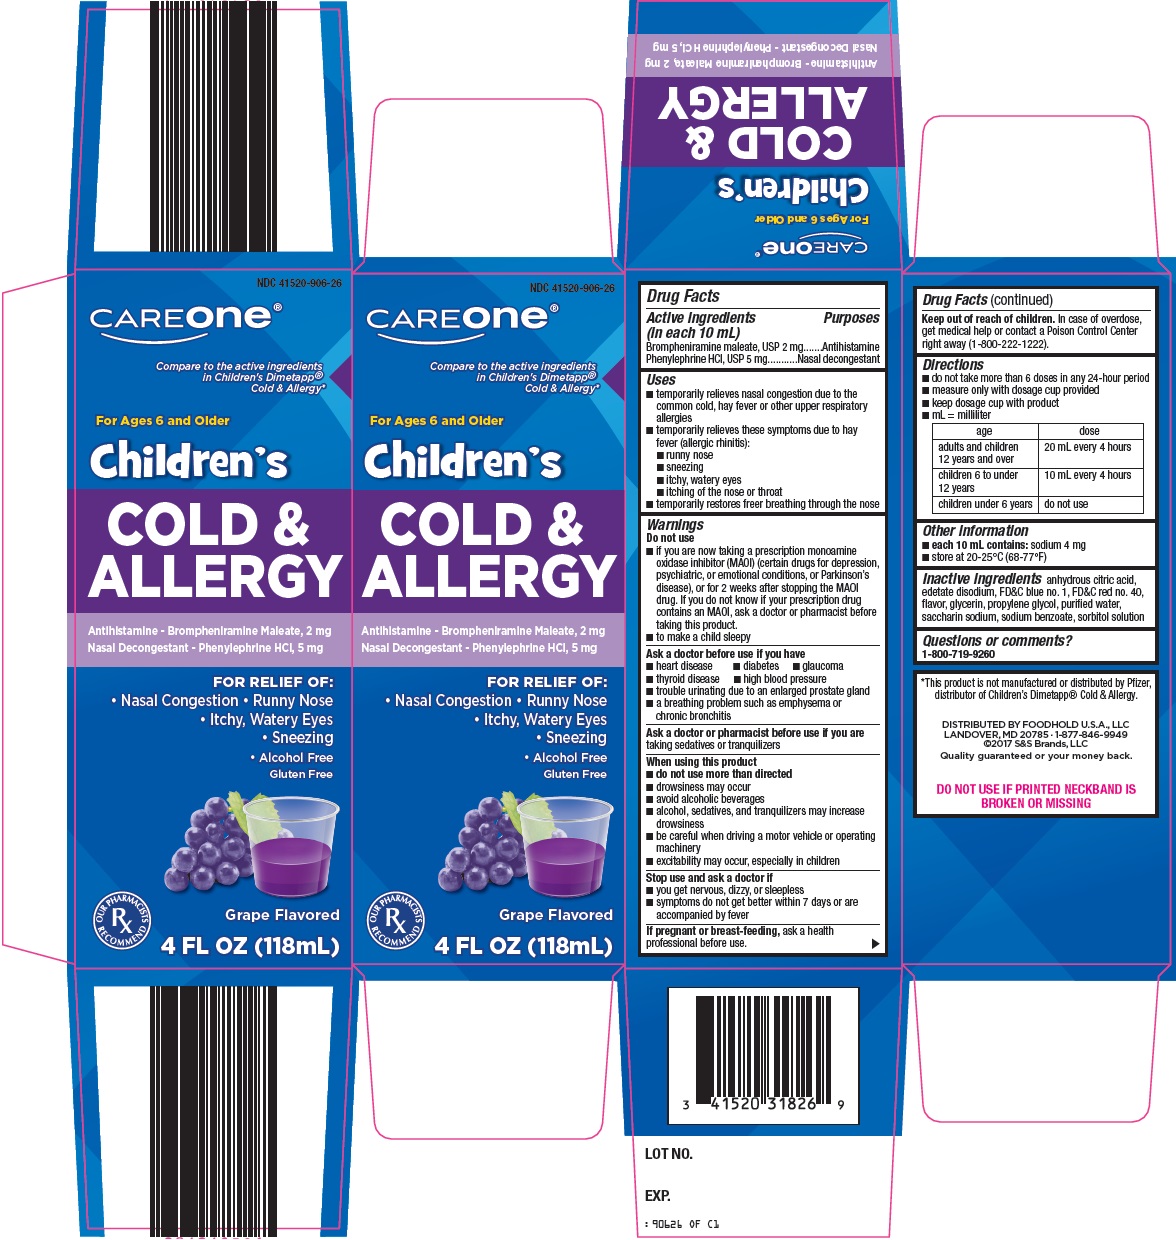 children's cold & allergy image